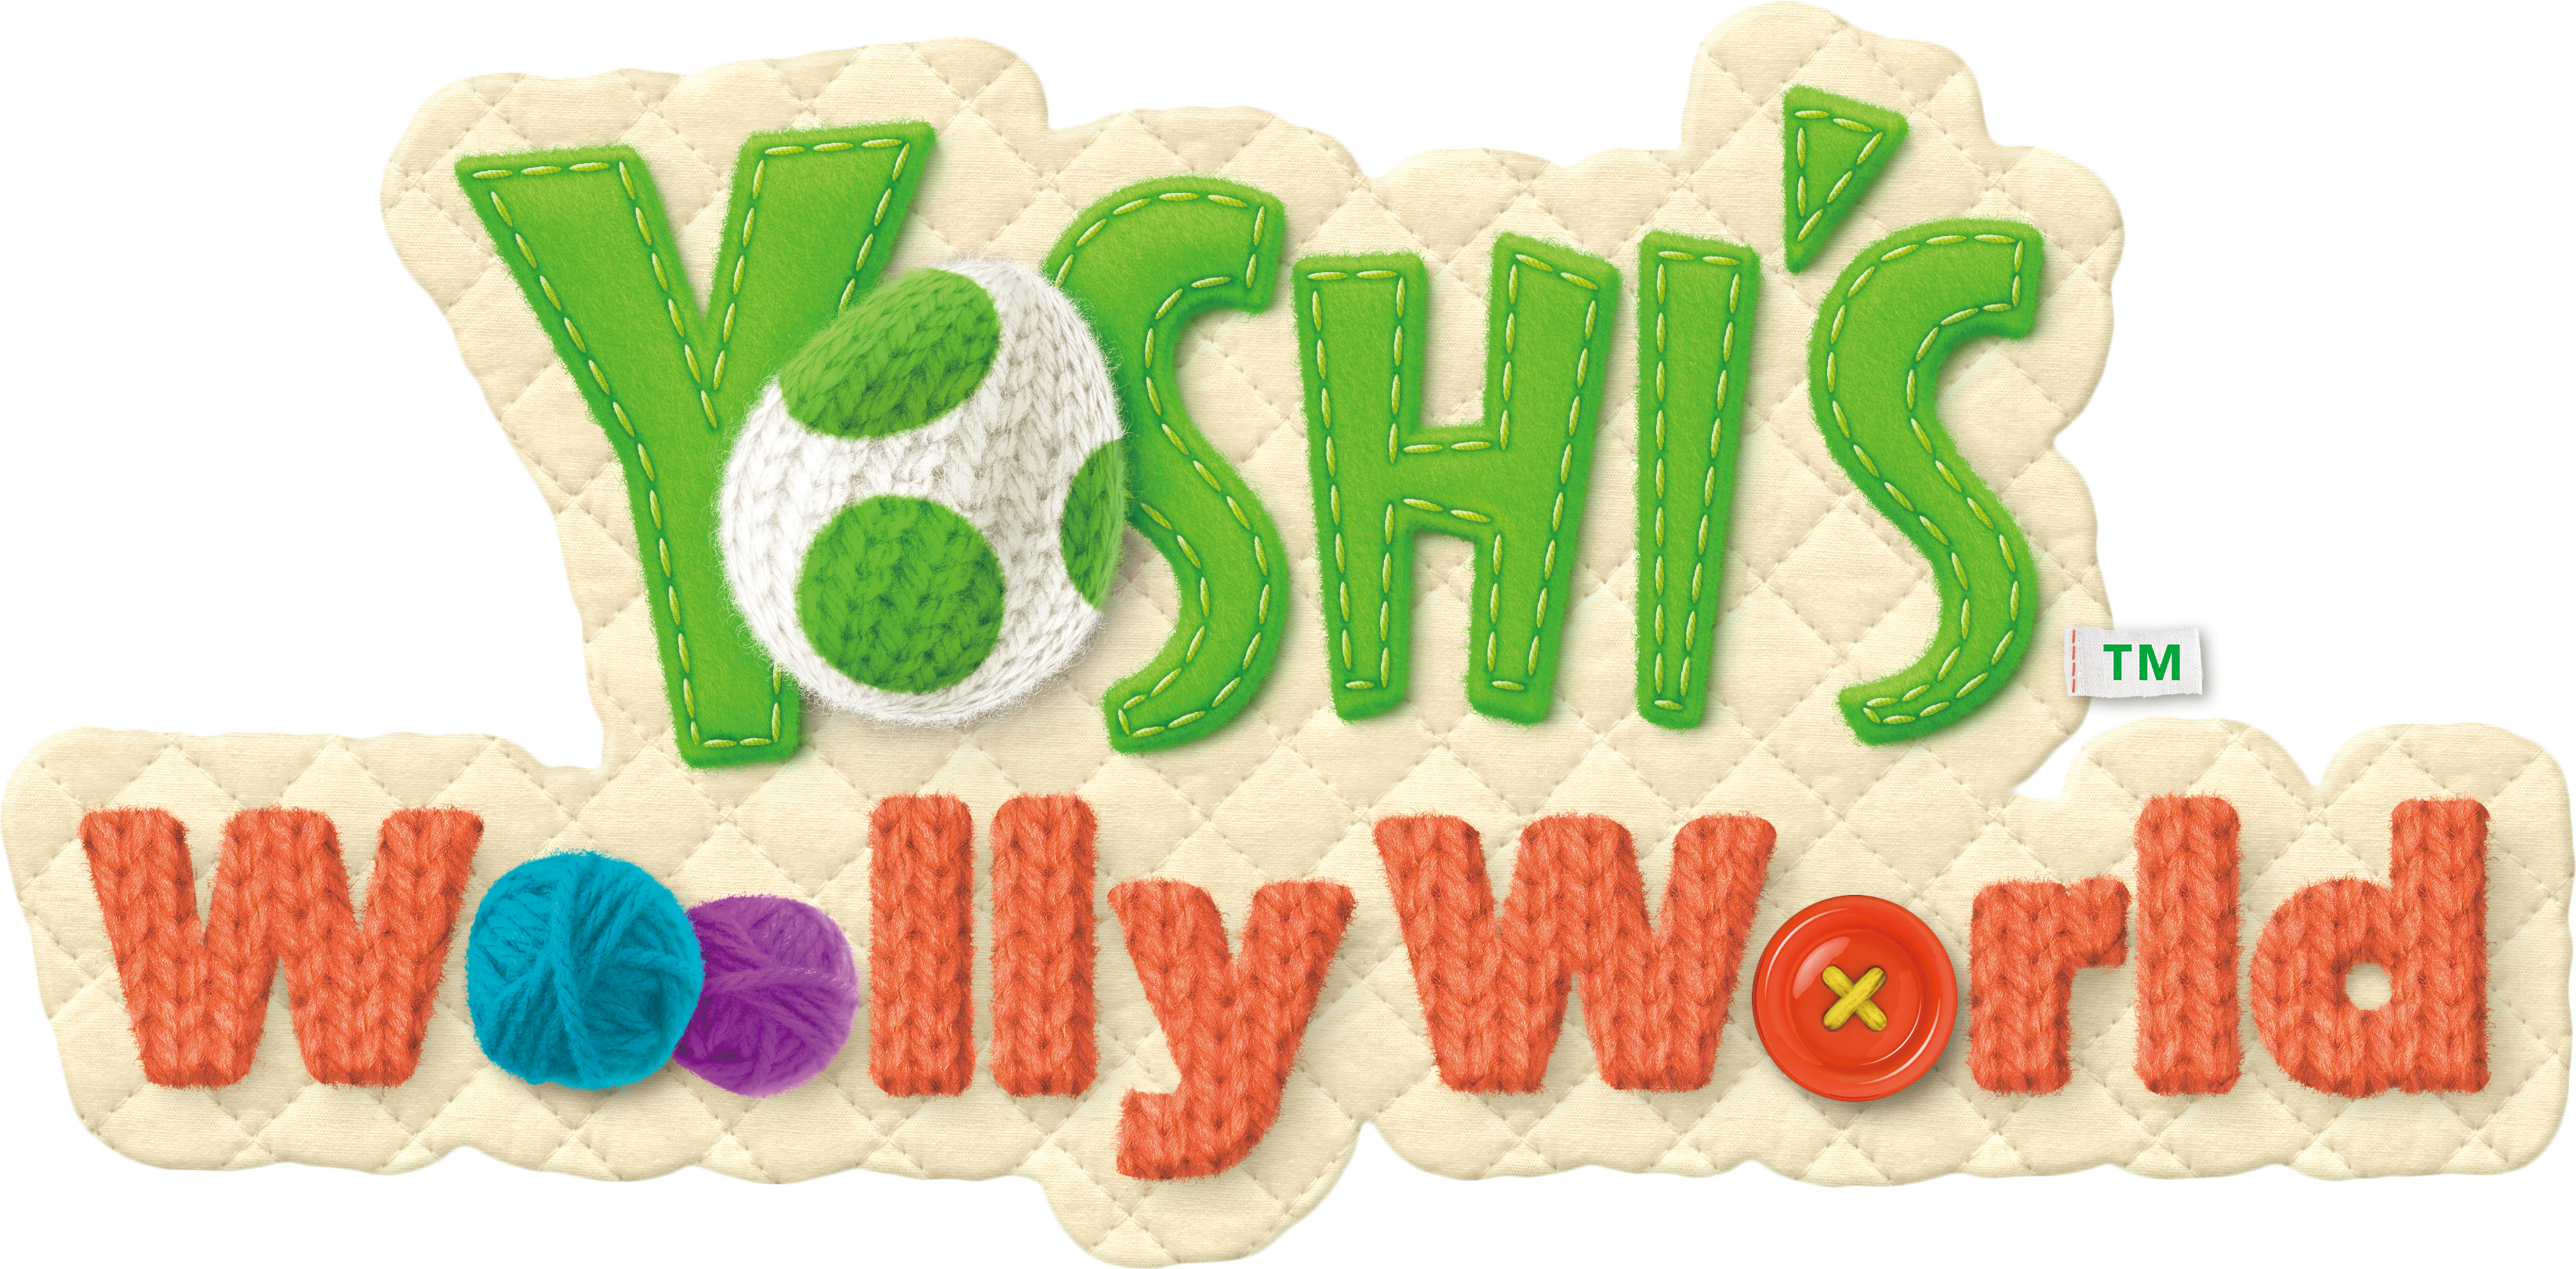 Yoshi's Woolly World HD wallpapers, Desktop wallpaper - most viewed